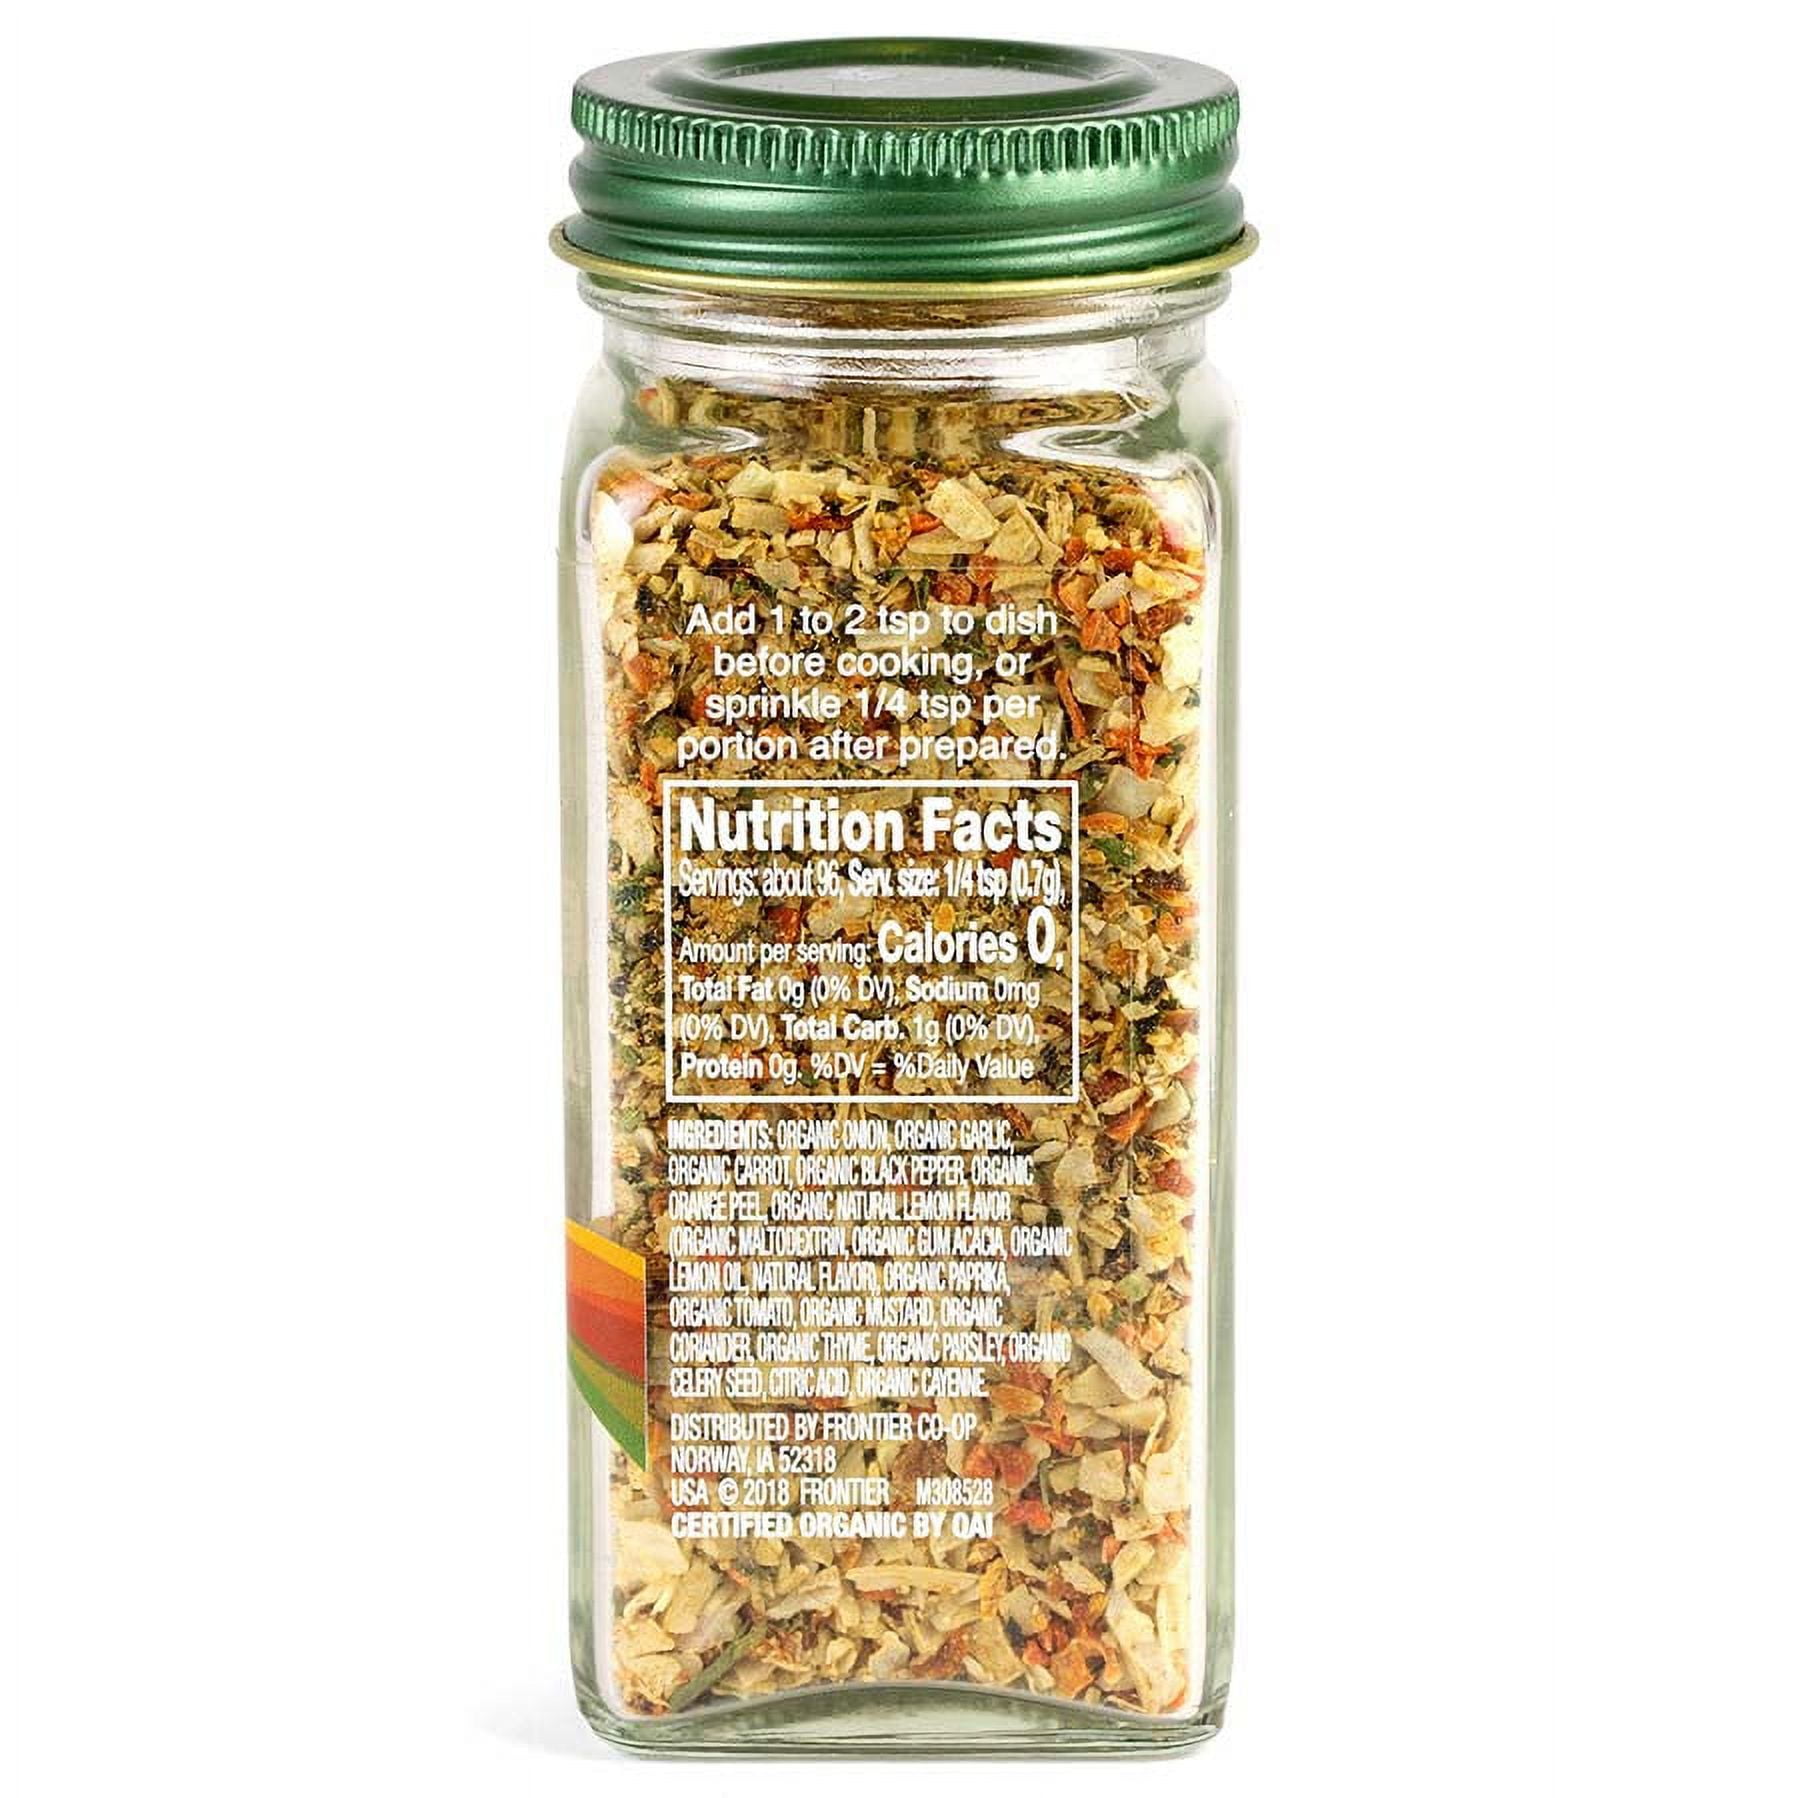 Salt Free Seasoning Blend Recipe - 3 Ways, No Salt, Just Herbs - My Vegan  Minimalist